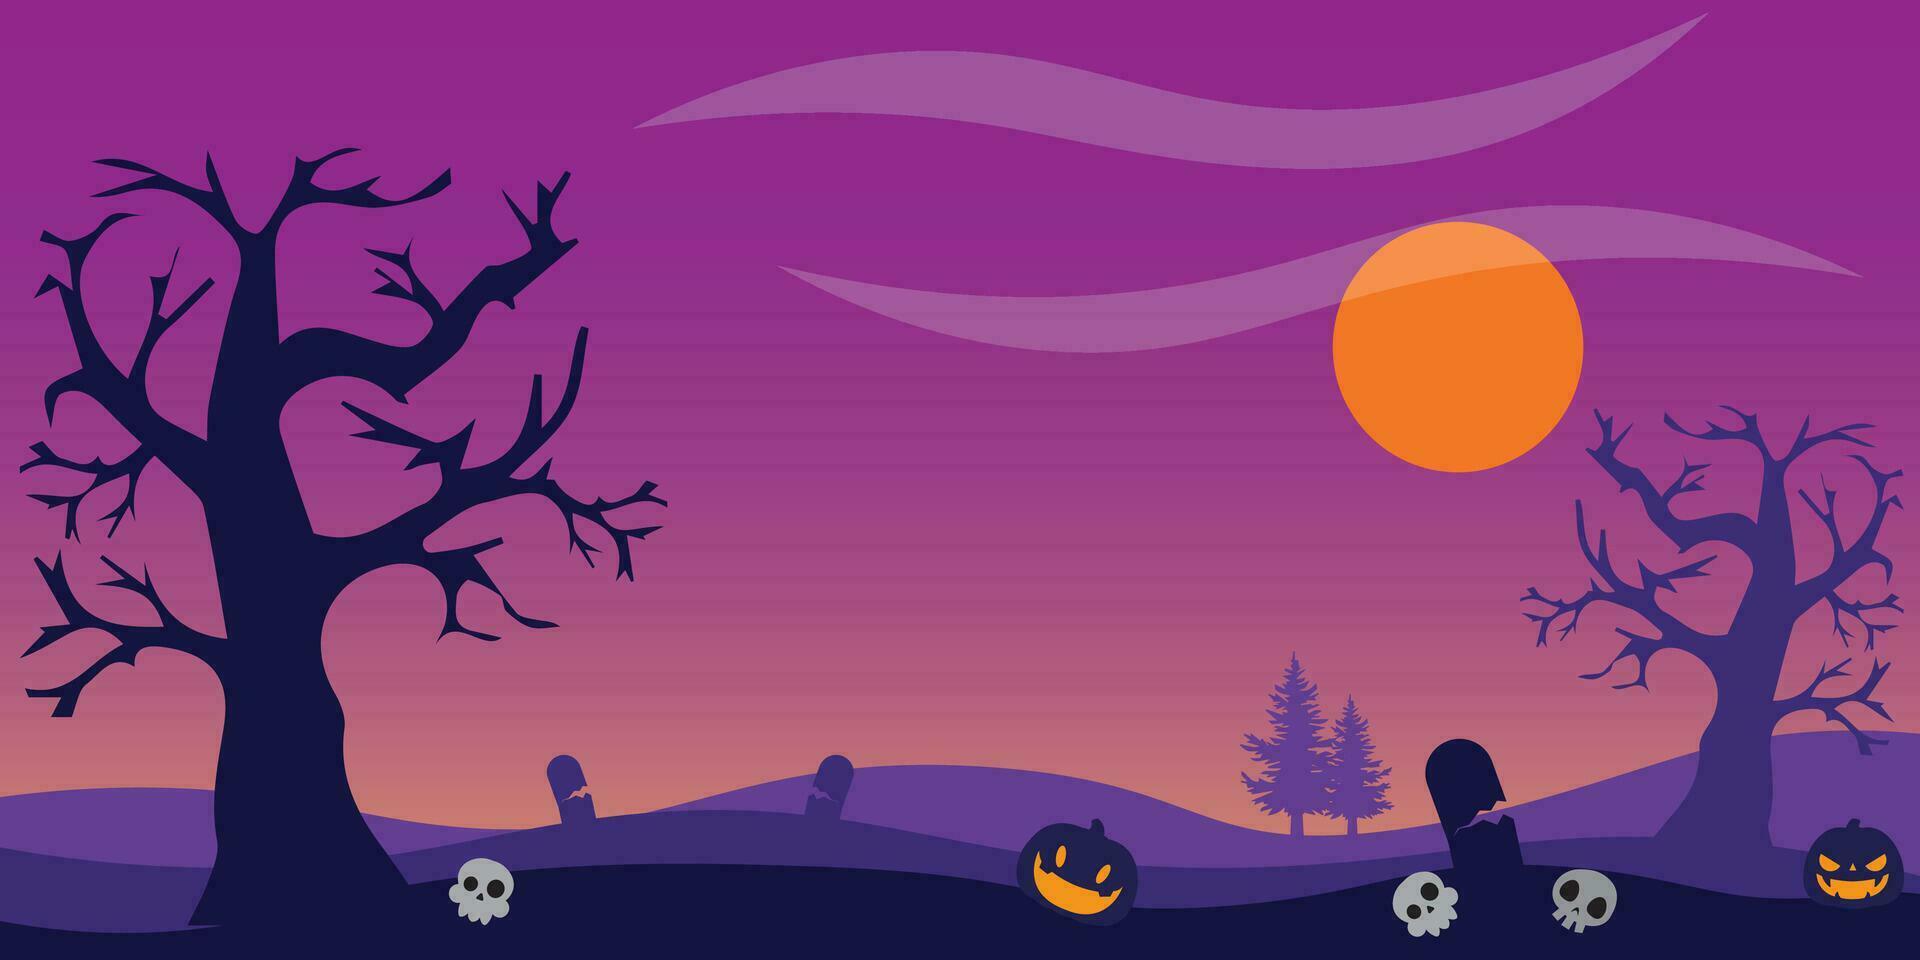 vektor bakgrund design med halloween tema